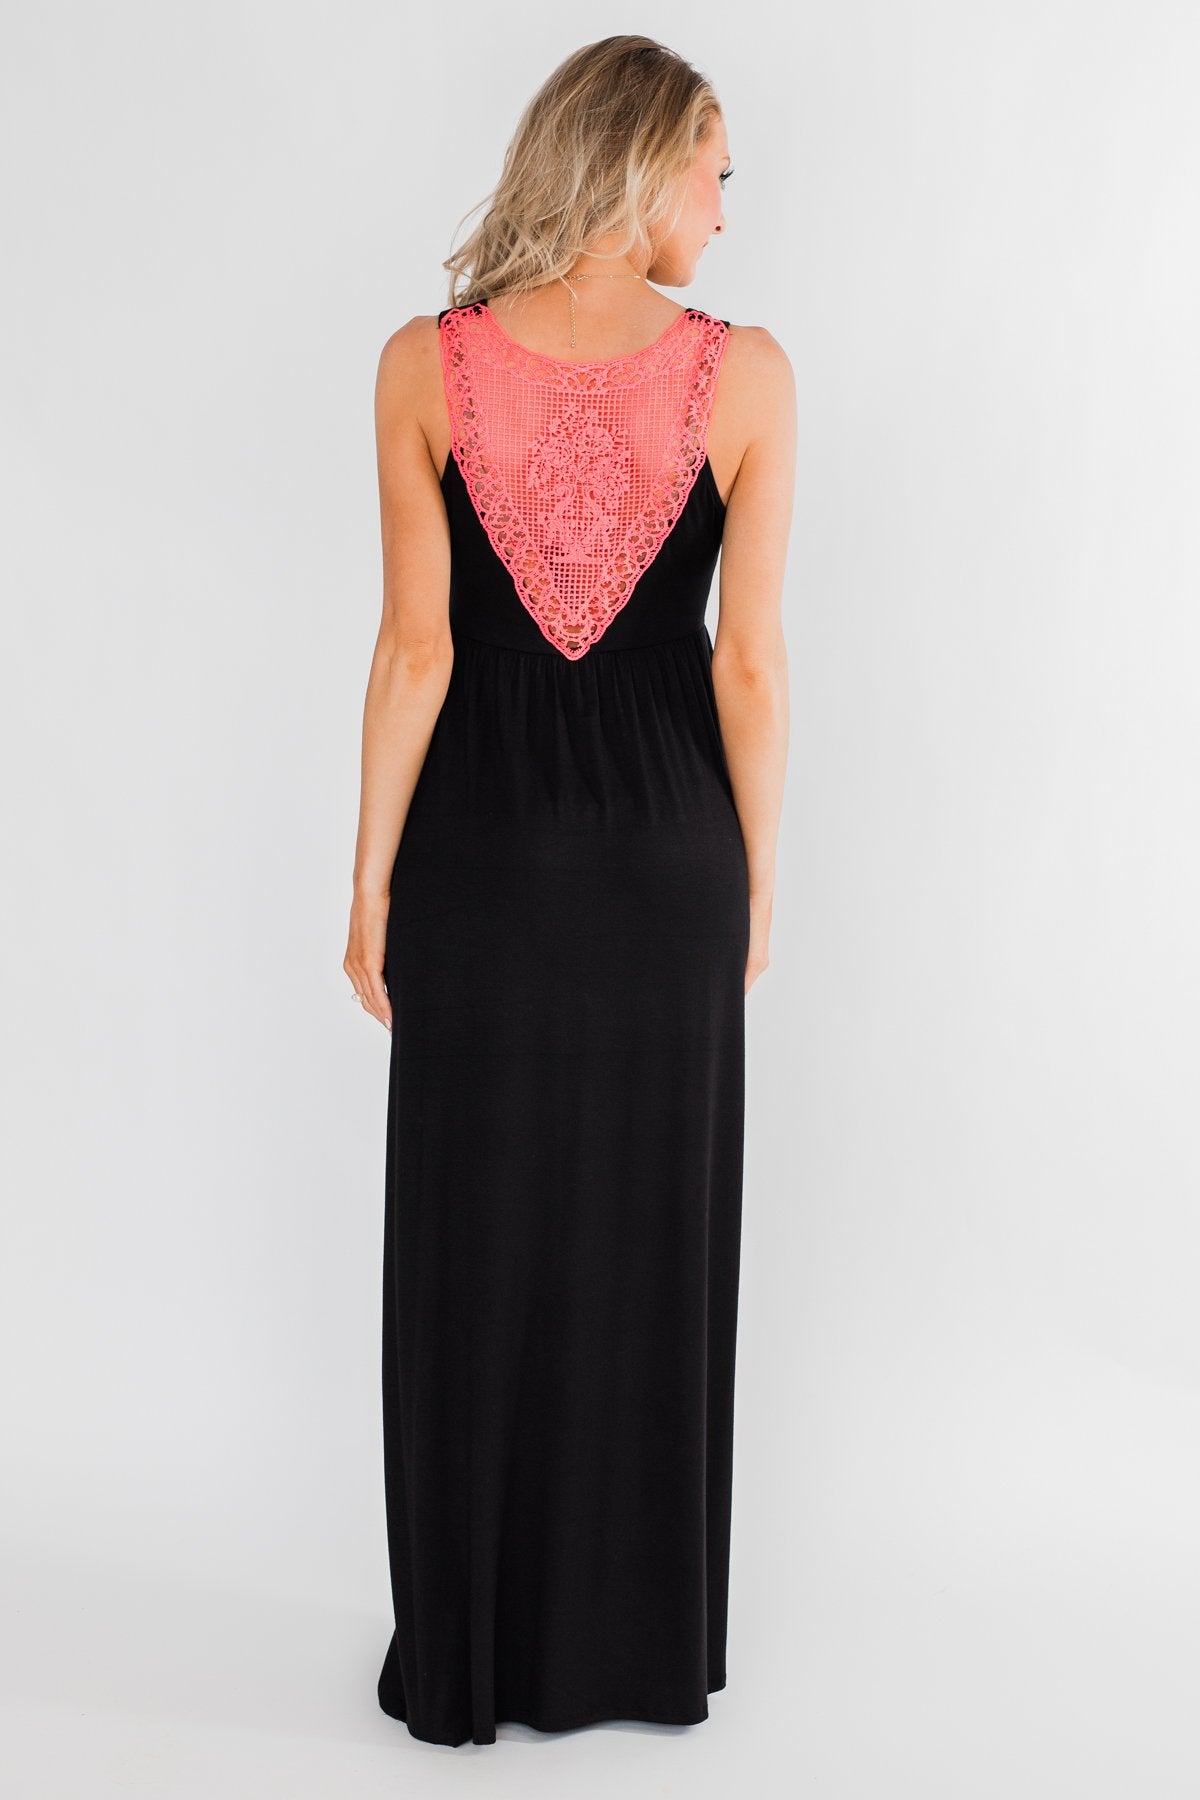 Brand New Start Crochet Maxi Dress- Neon Pink & Black